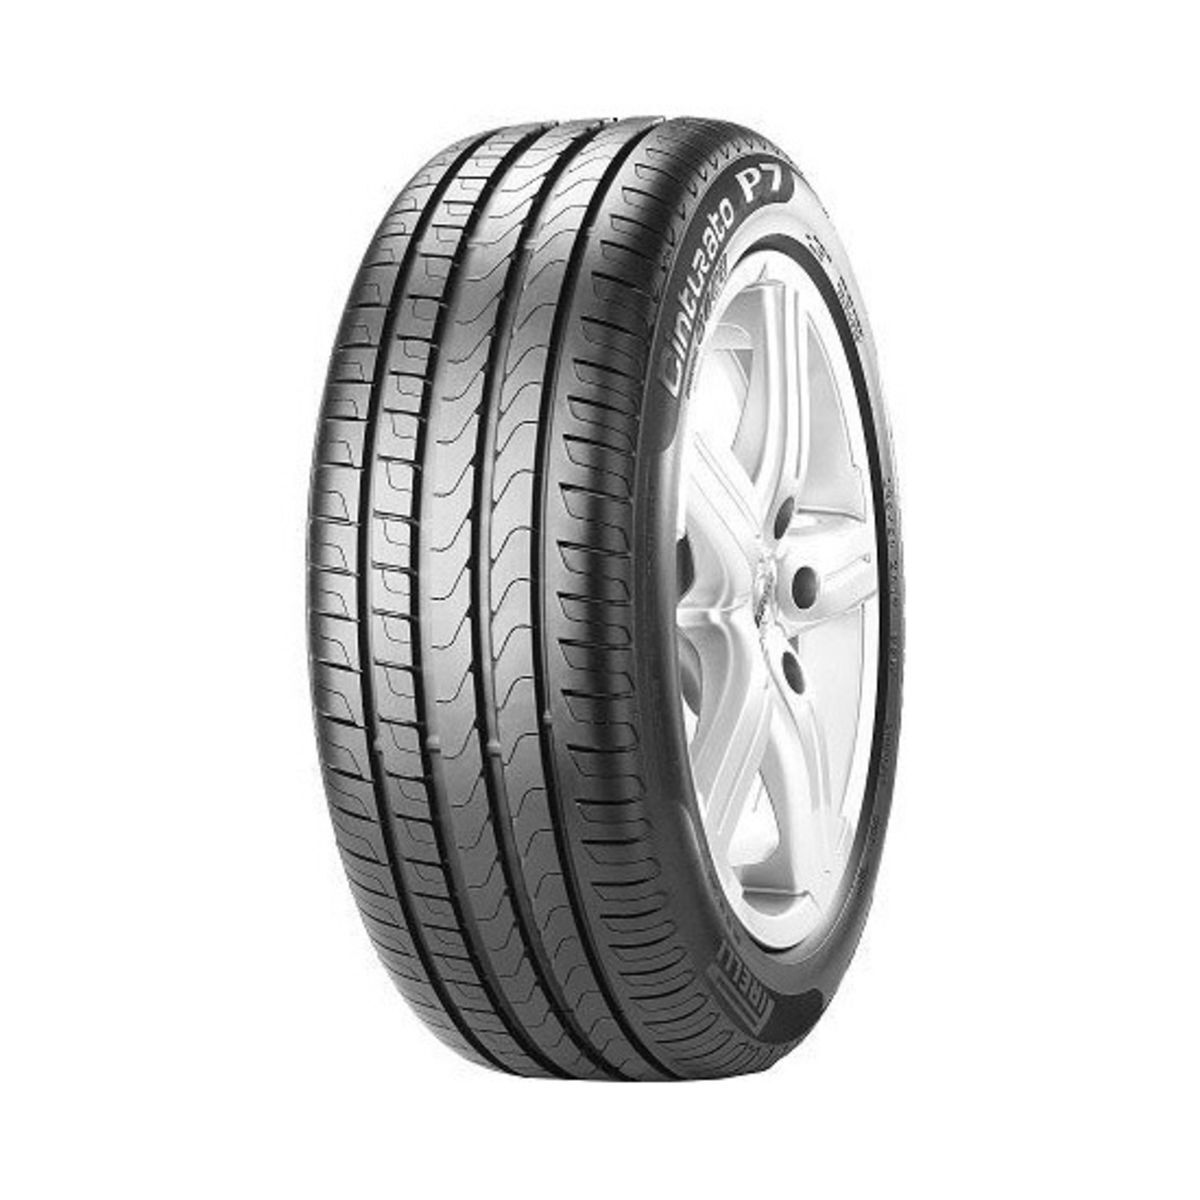 Neumáticos de verano PIRELLI Cinturato P7 255/45R18 99W